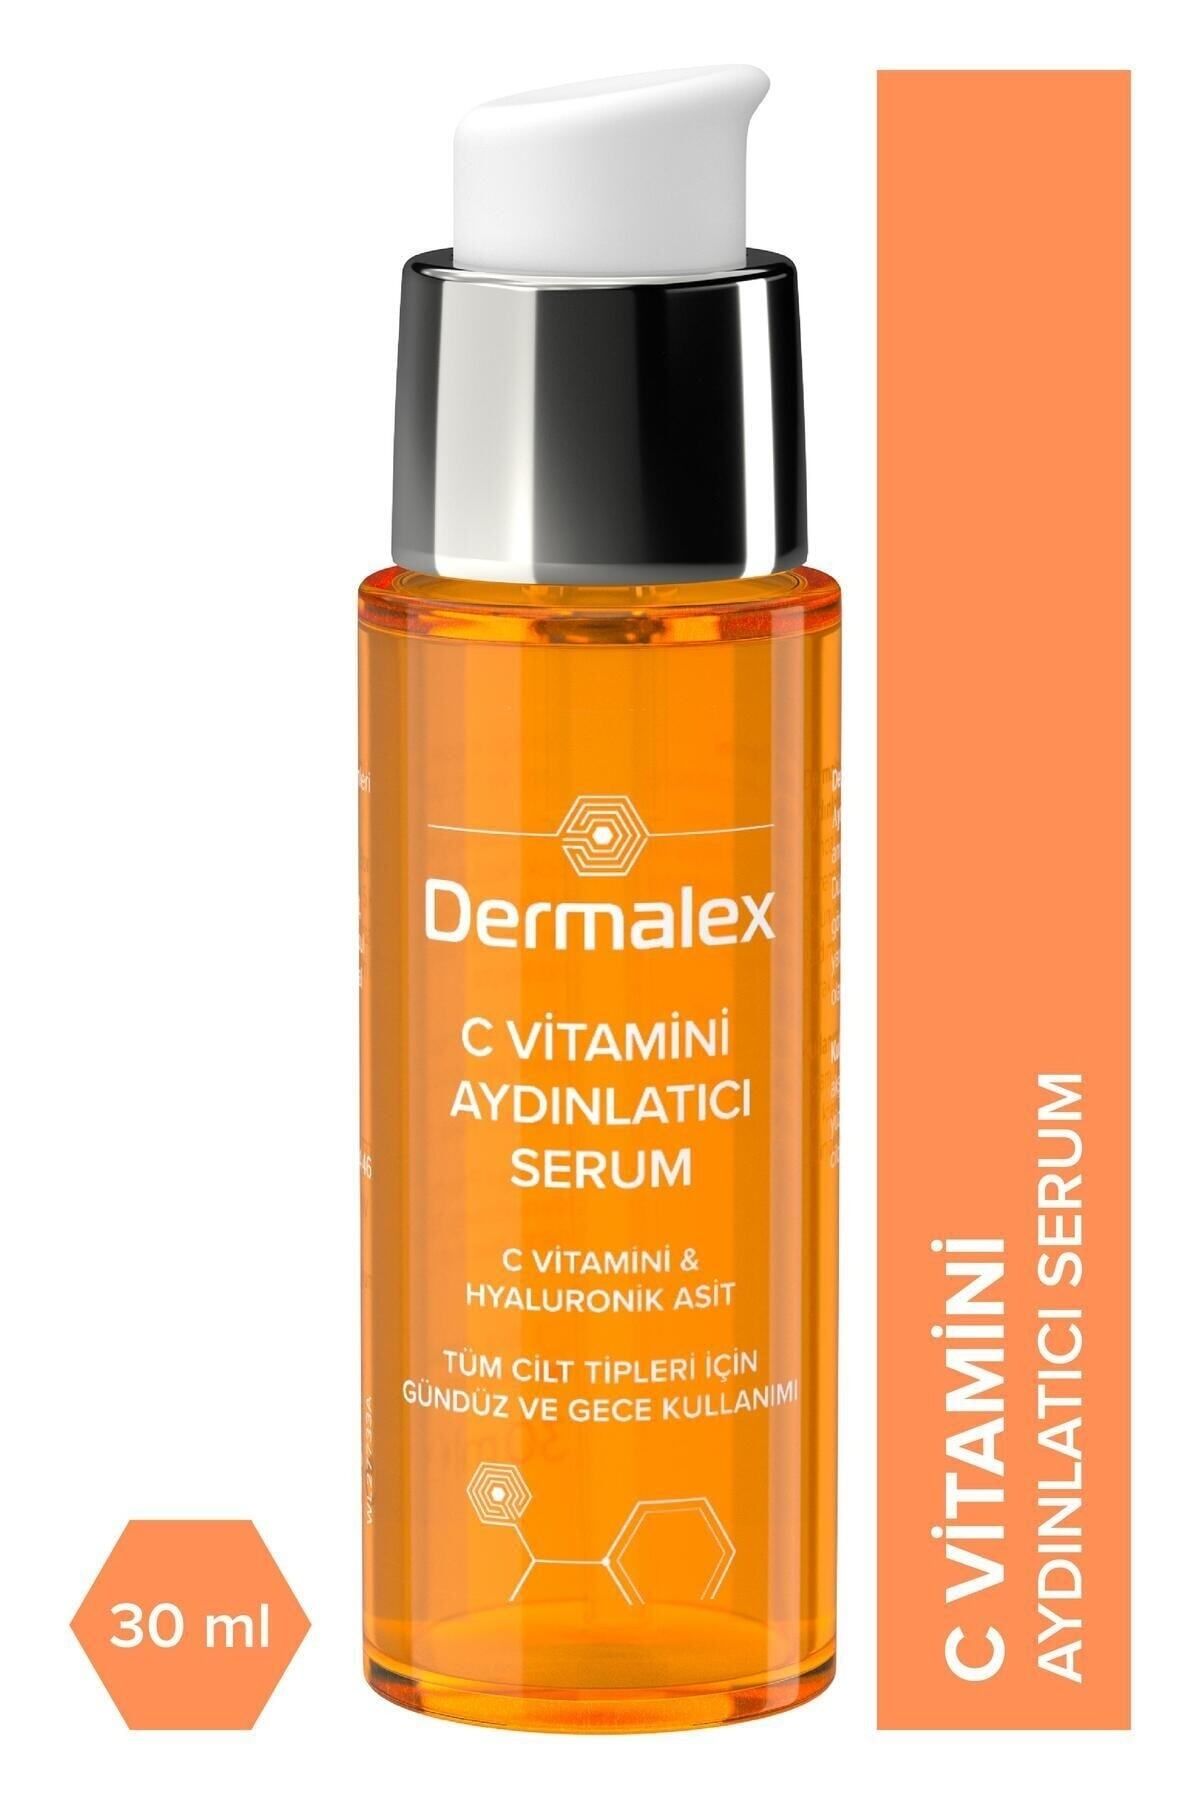 dermalex C Vitamini Aydınlatıcı Serum